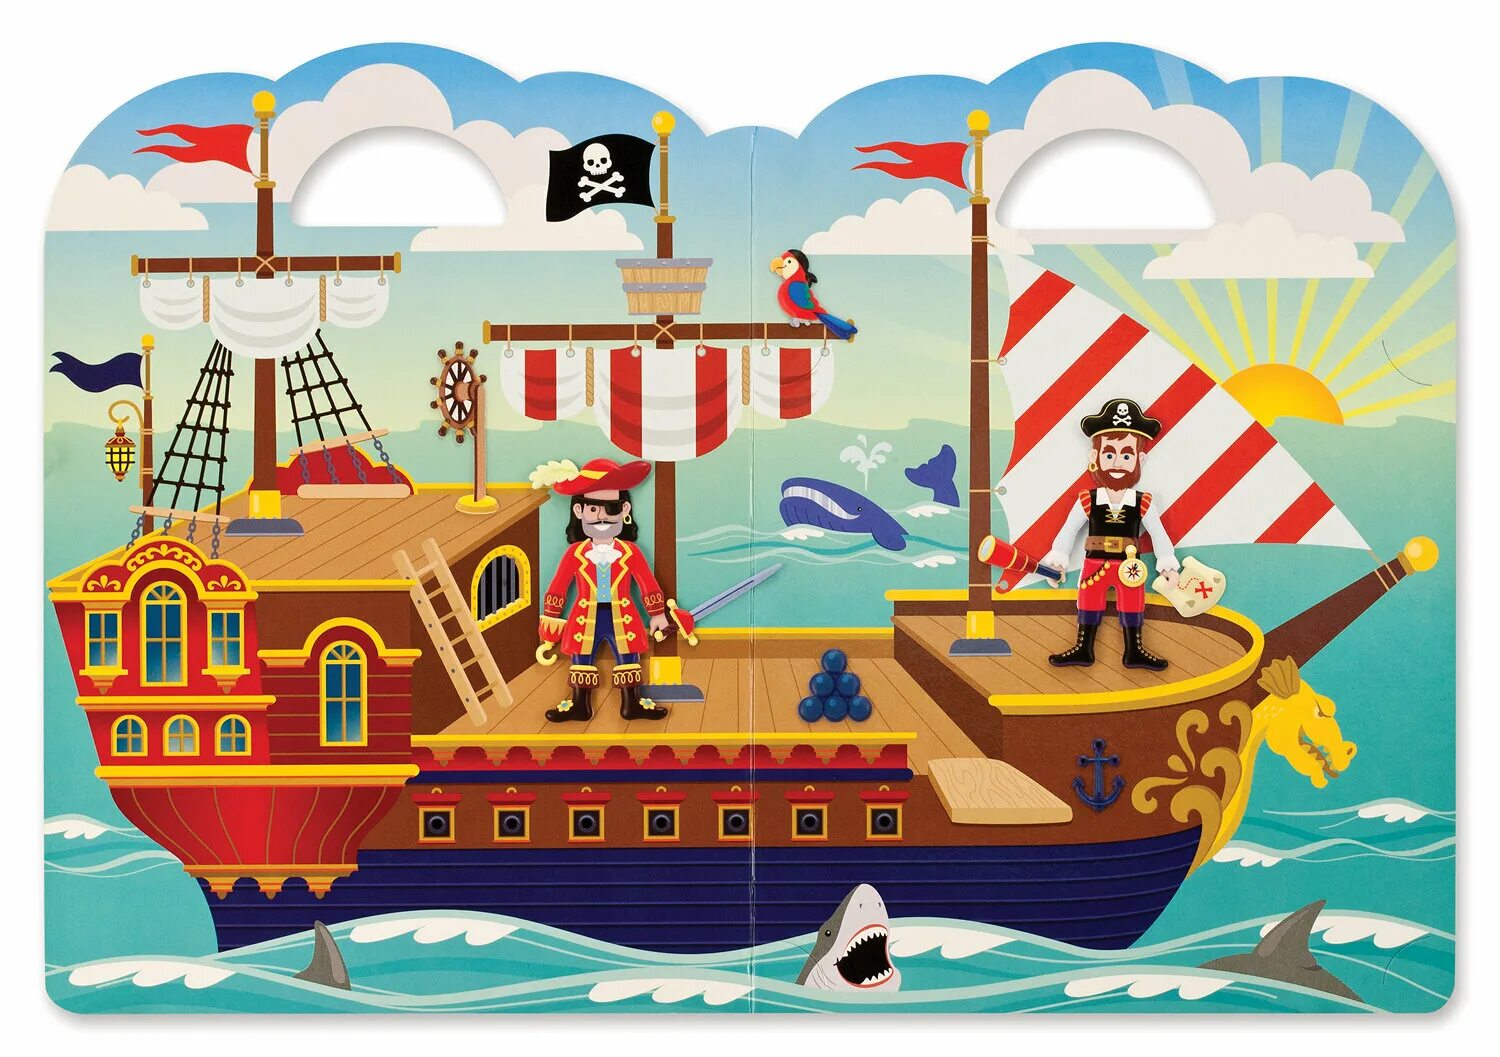 3d-пазл Melissa & Doug пиратский корабль (9045). Пиратский корабль для детей. Корабль пиратов. Пиратские пазлы для детей. Игры дети корабли